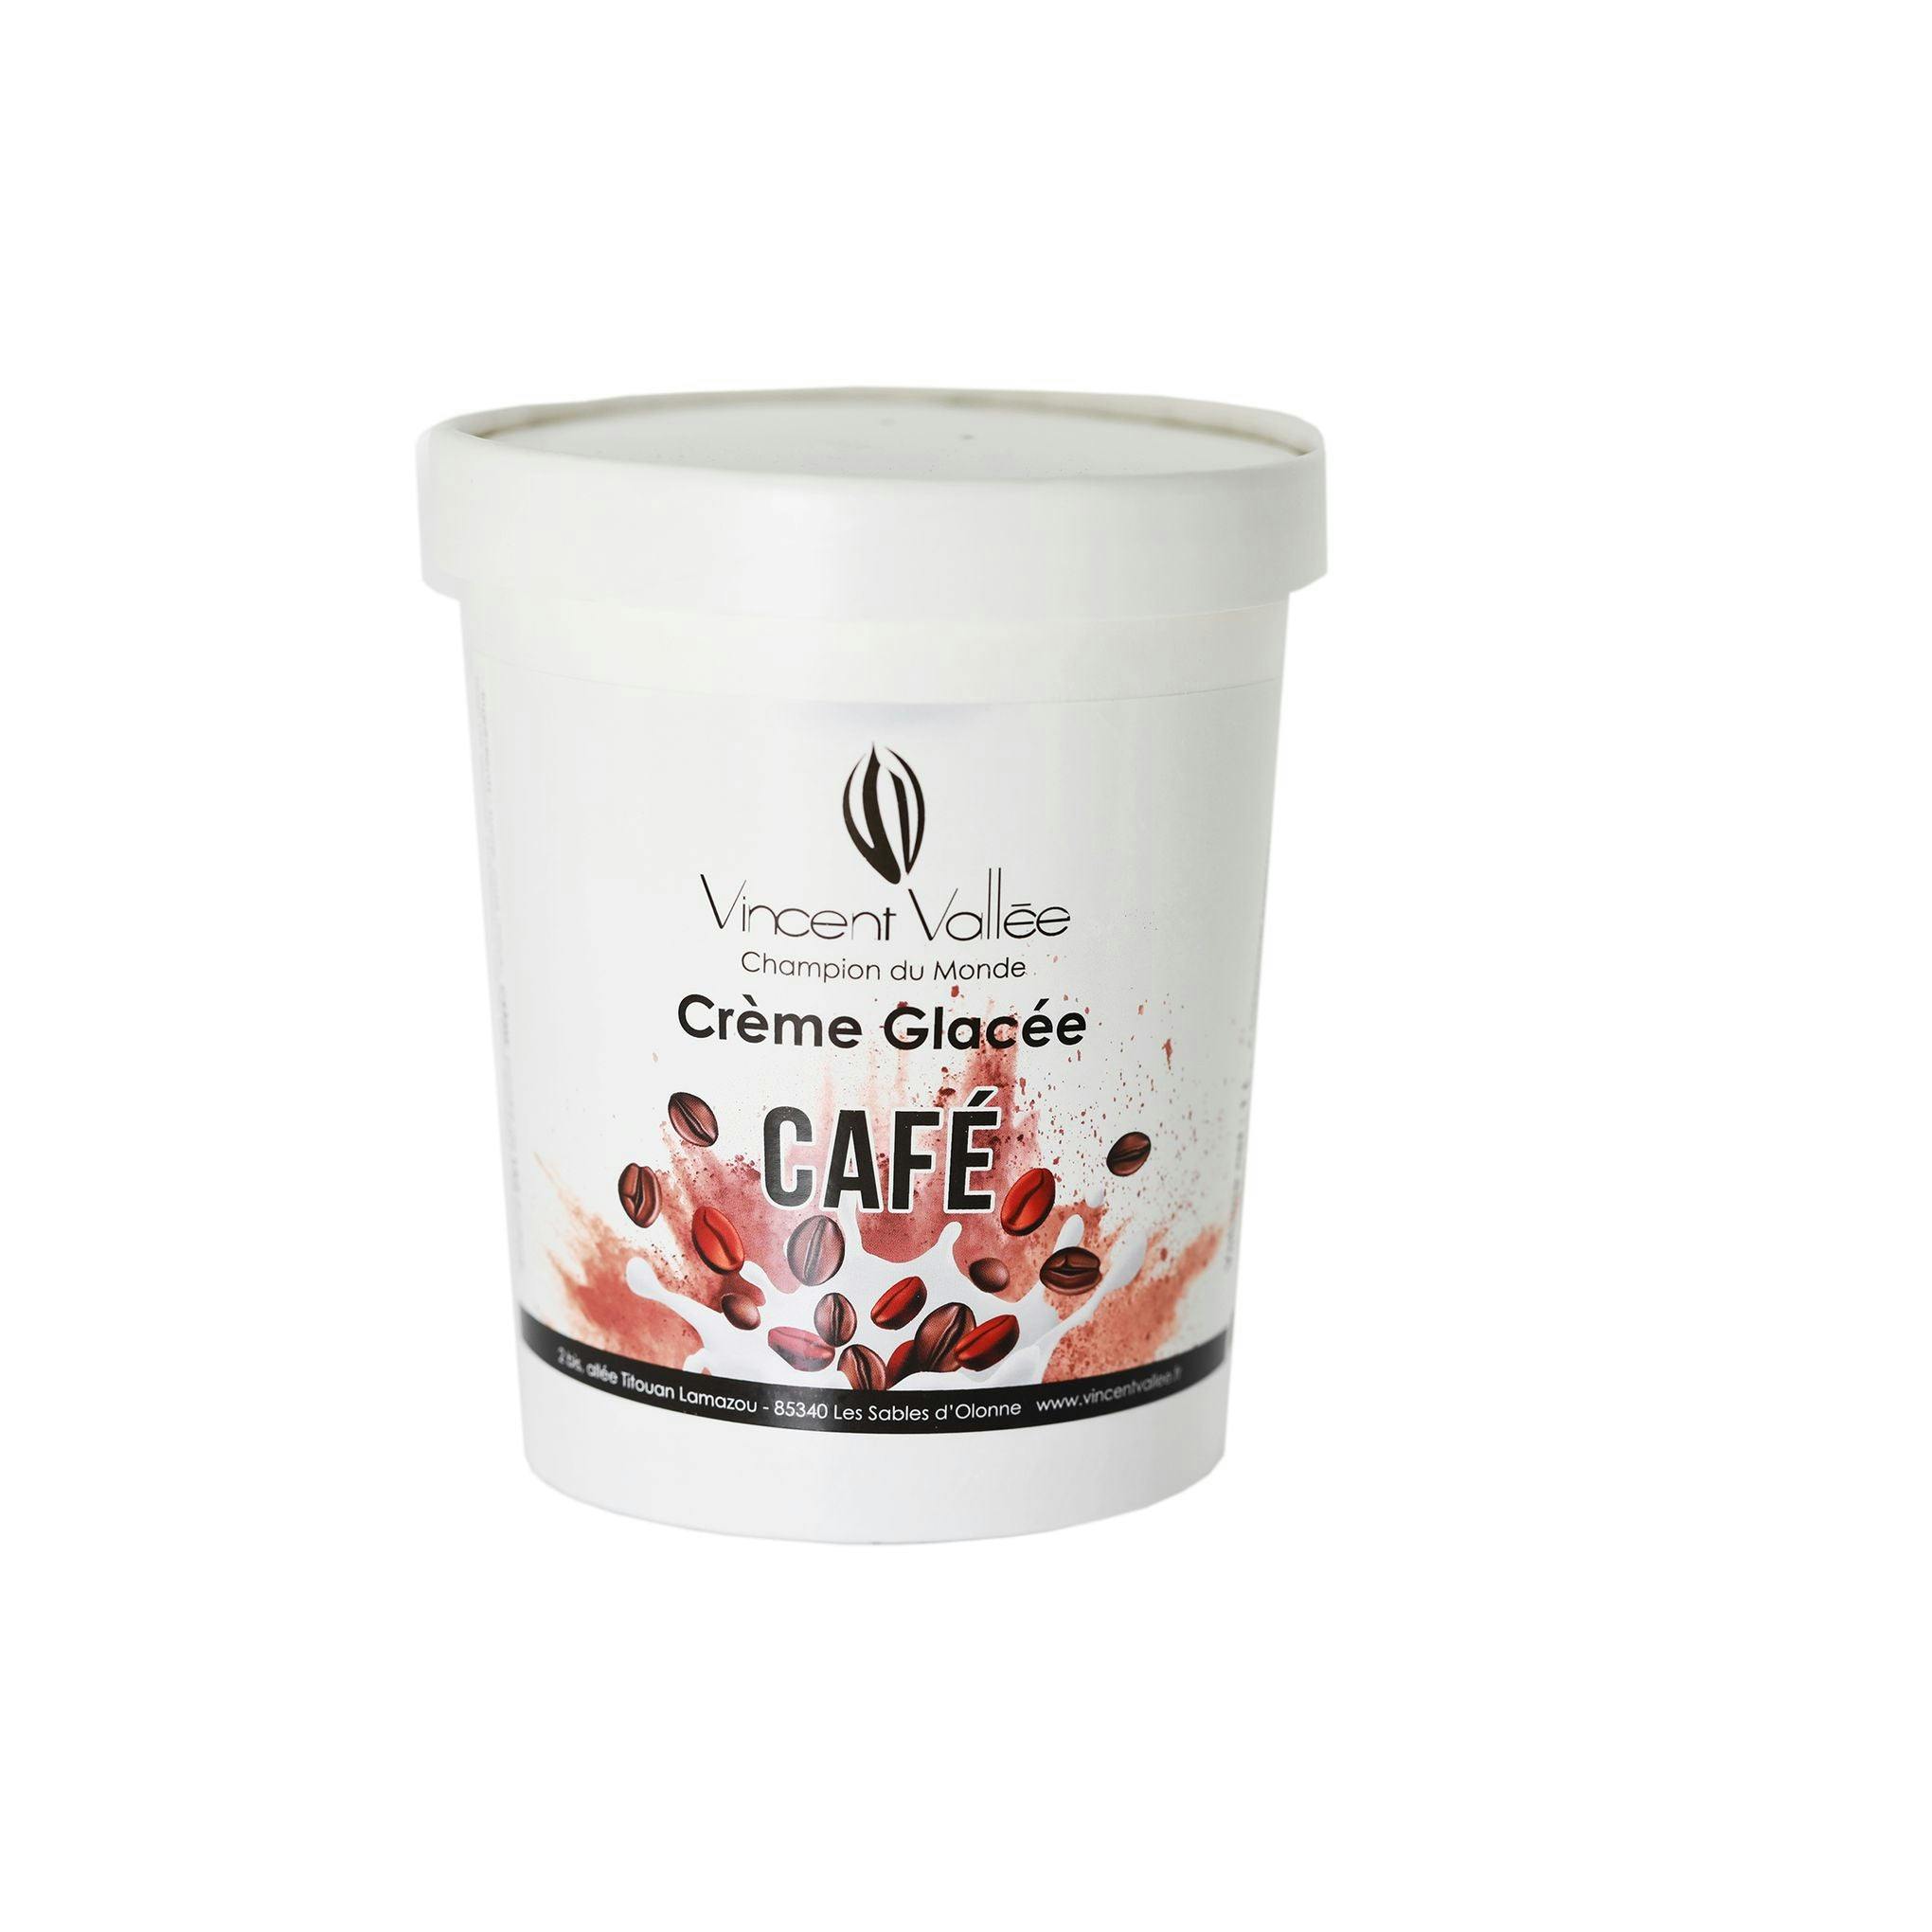 Crème glacée Café - Vincent Vallée world champion chocolatier